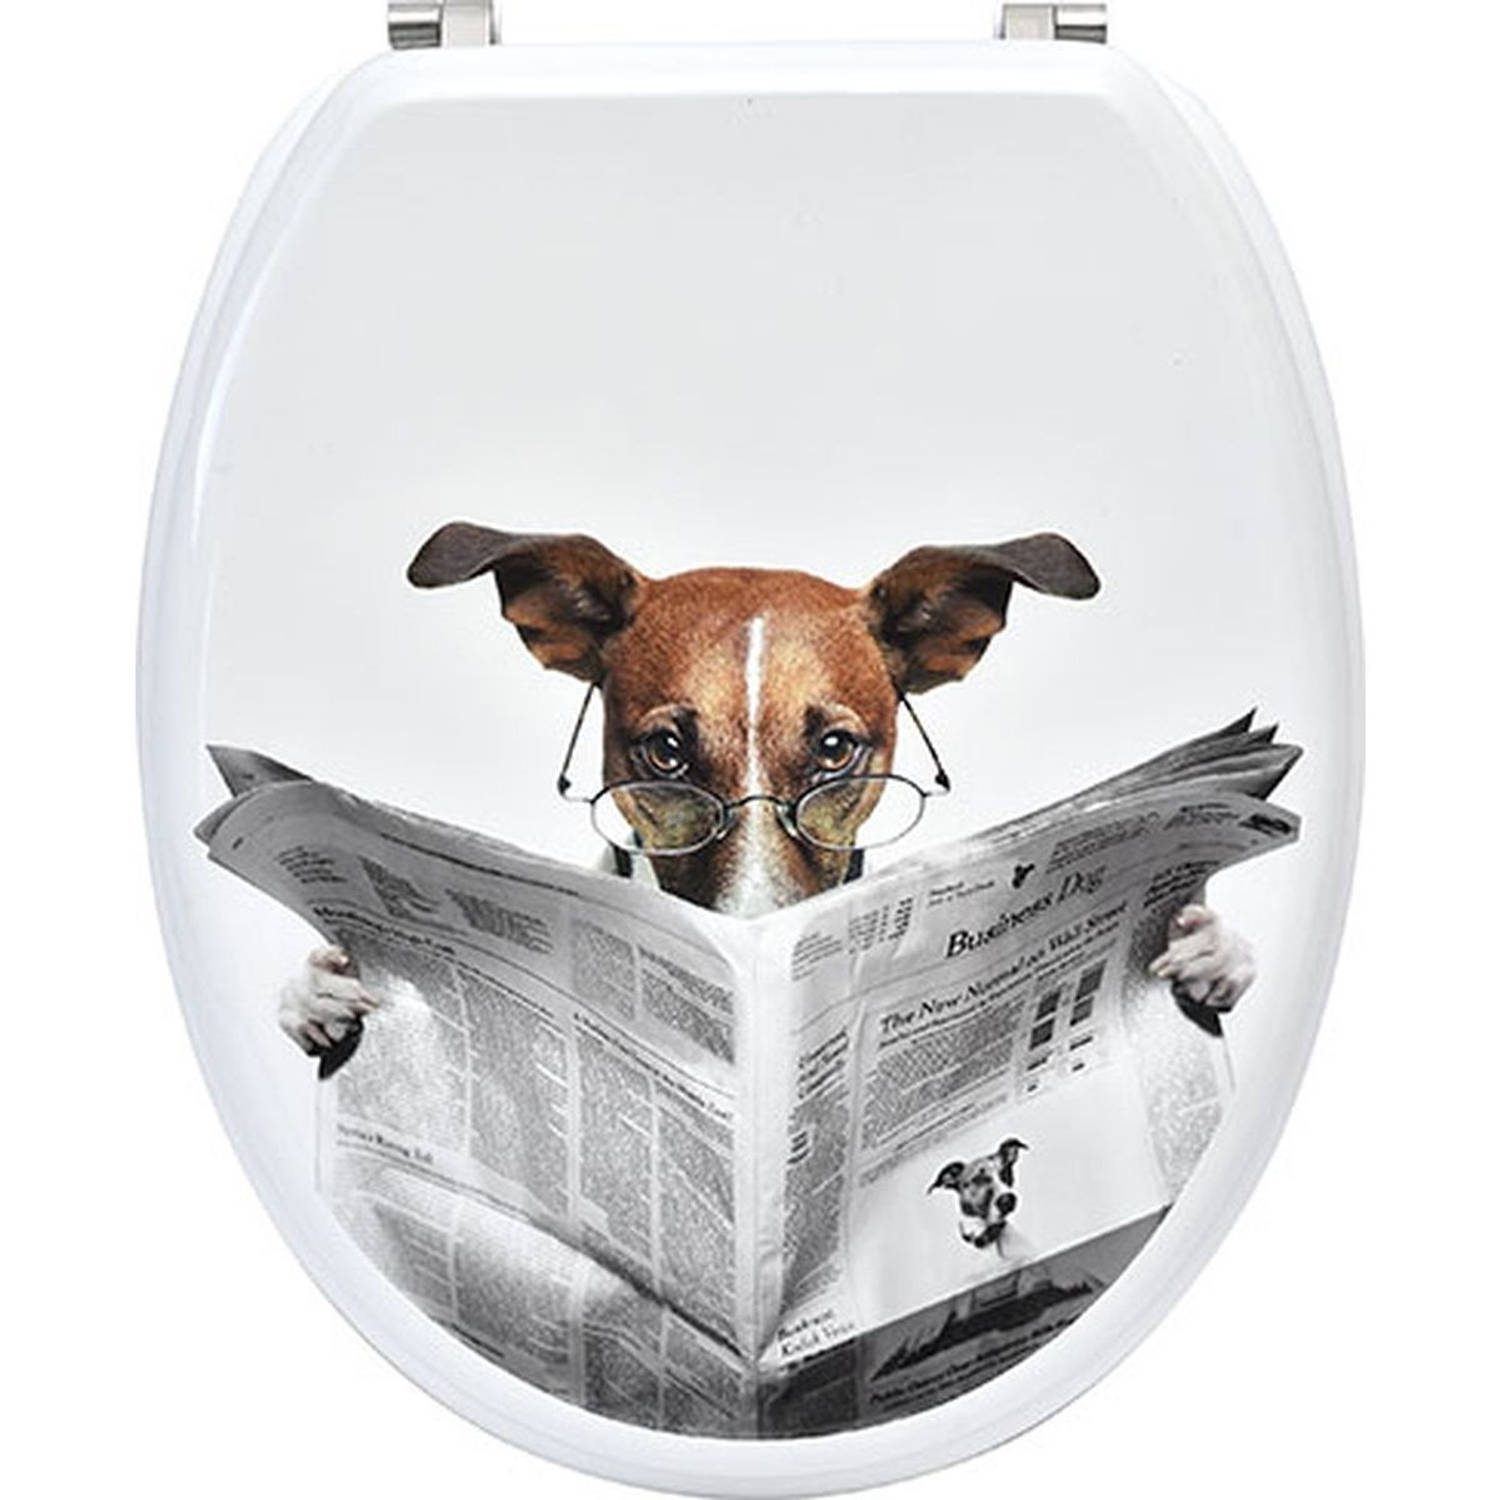 Gebor - Praktische Toiletbril Van Mdf - Wit Met Hond Leest Krant Design - 18inch - 37,5x46cm - Wc Bril -